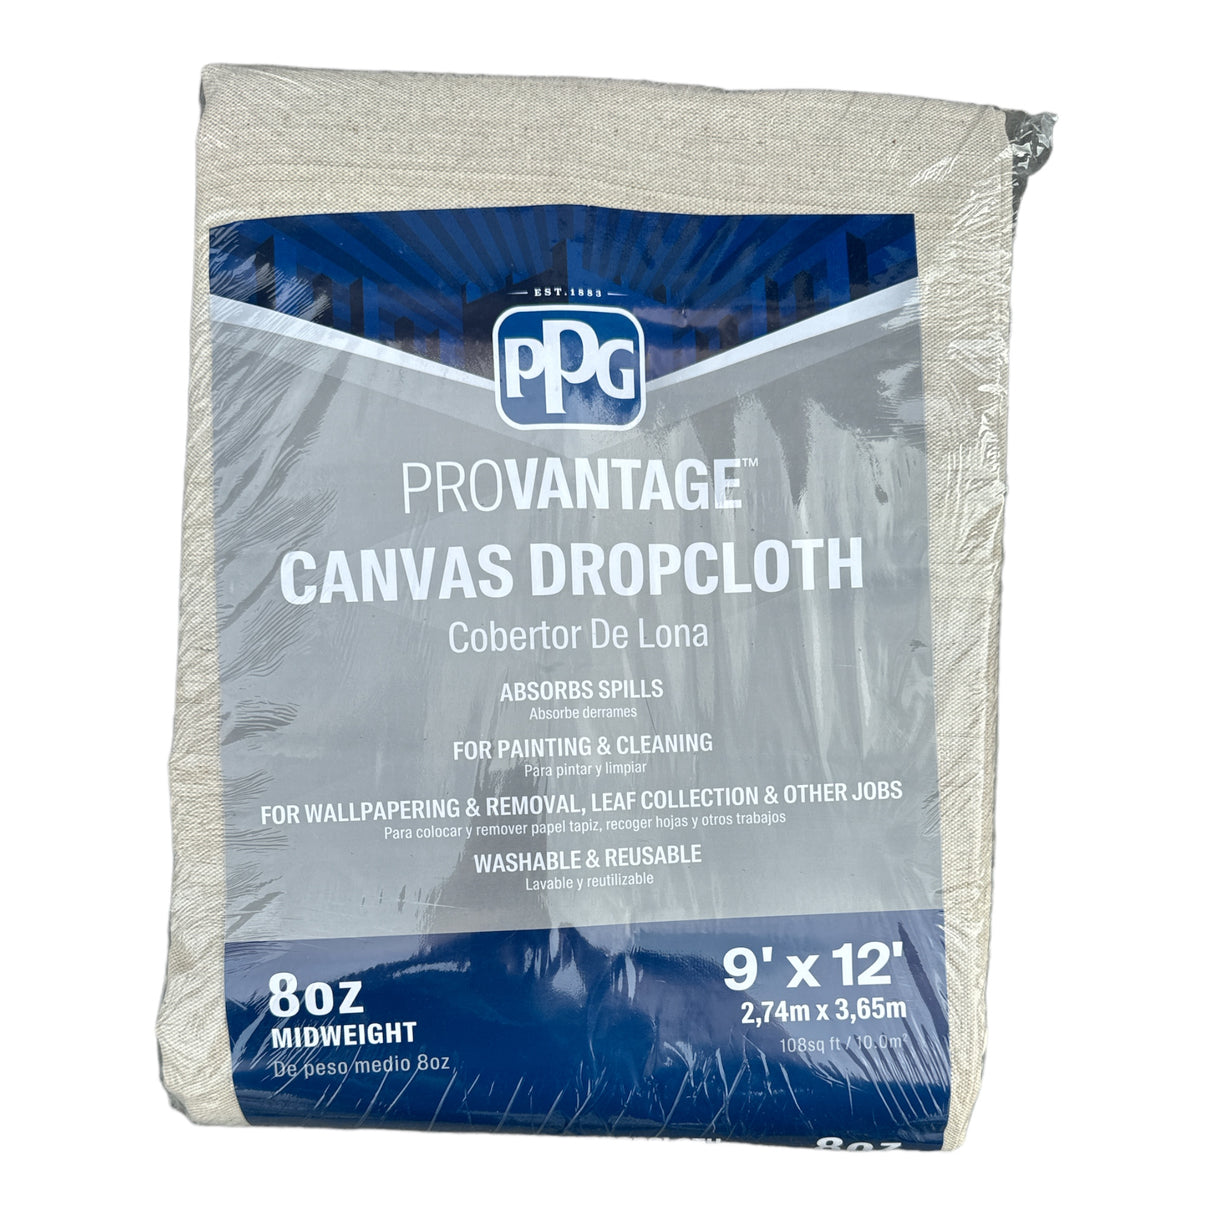 PPG ProVantage Canvas Drop Cloth 9-Ft x 12-Ft (Midweight, 8oz)